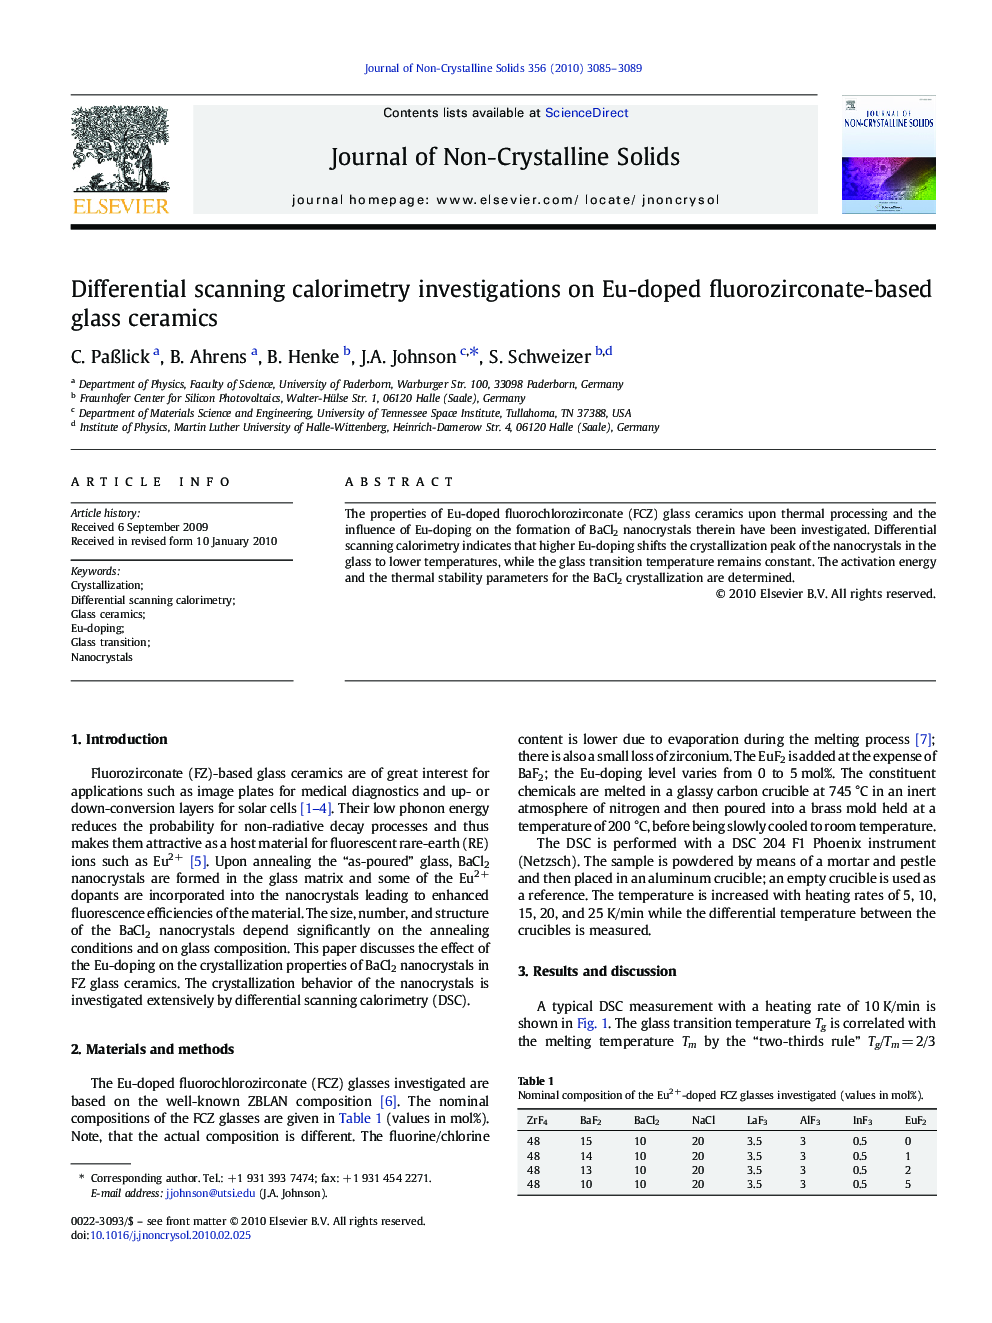 Differential scanning calorimetry investigations on Eu-doped fluorozirconate-based glass ceramics